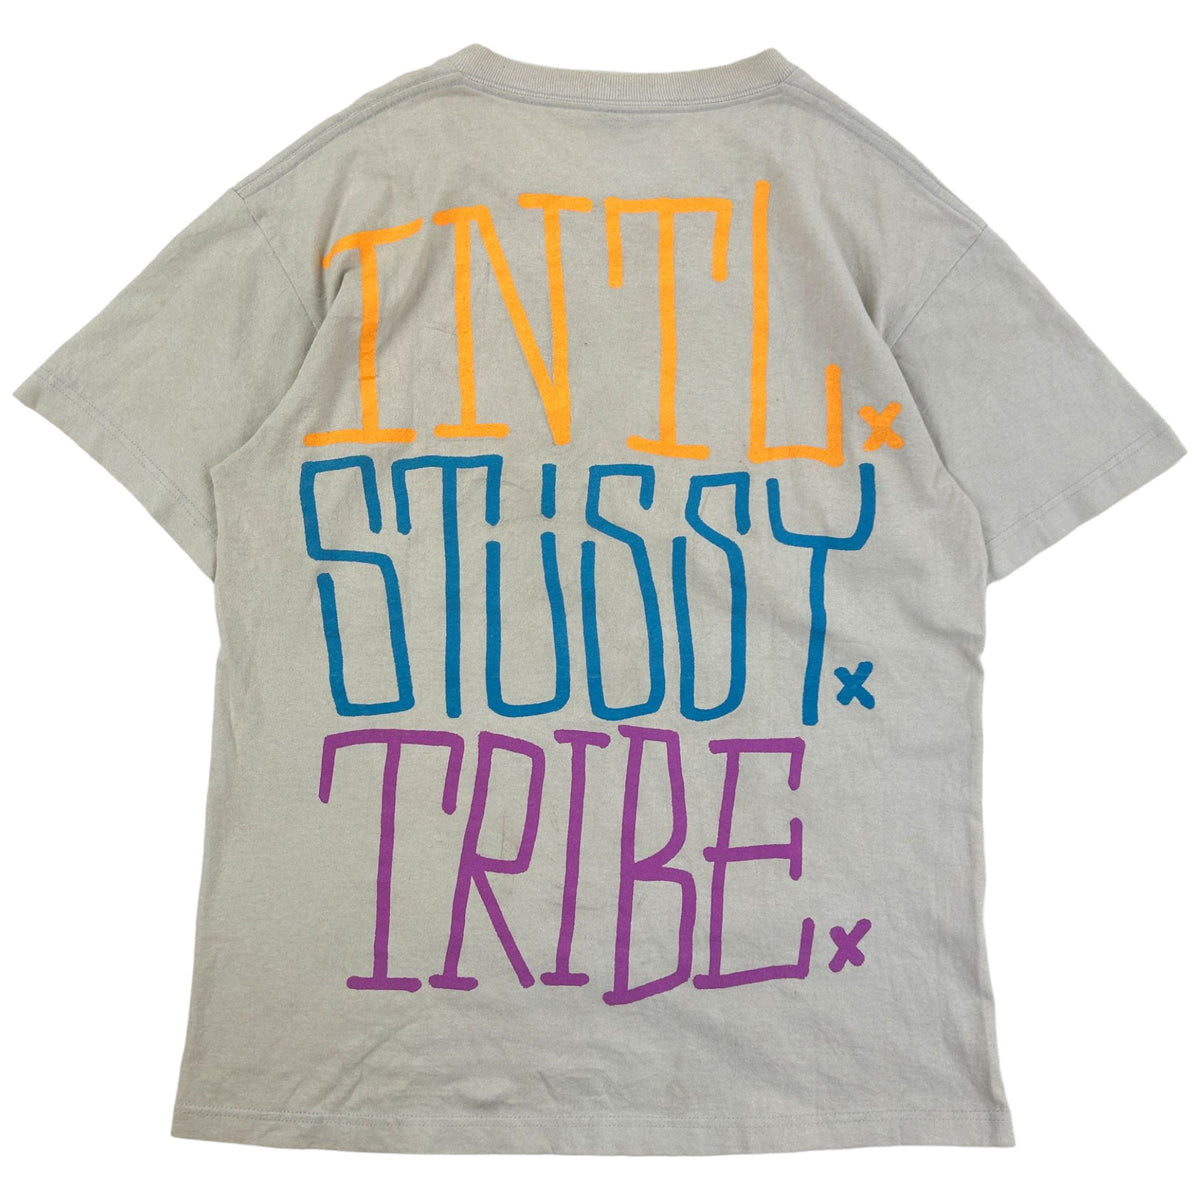 Vintage Stussy International Tribe Graphic T-Shirt Size M